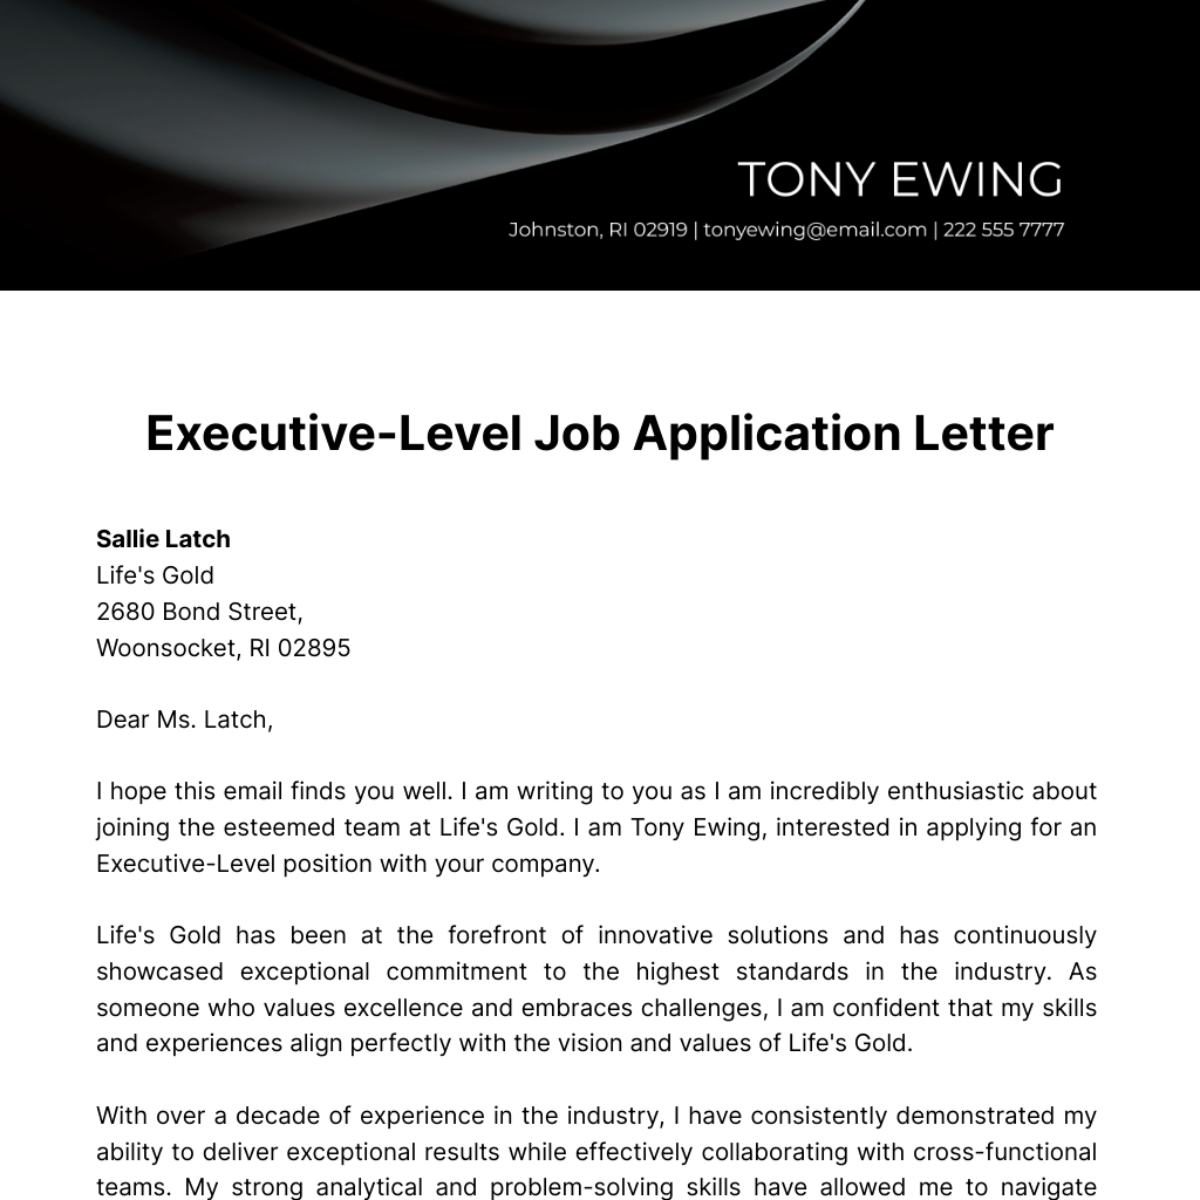 Executive-Level Job Application Letter  Template